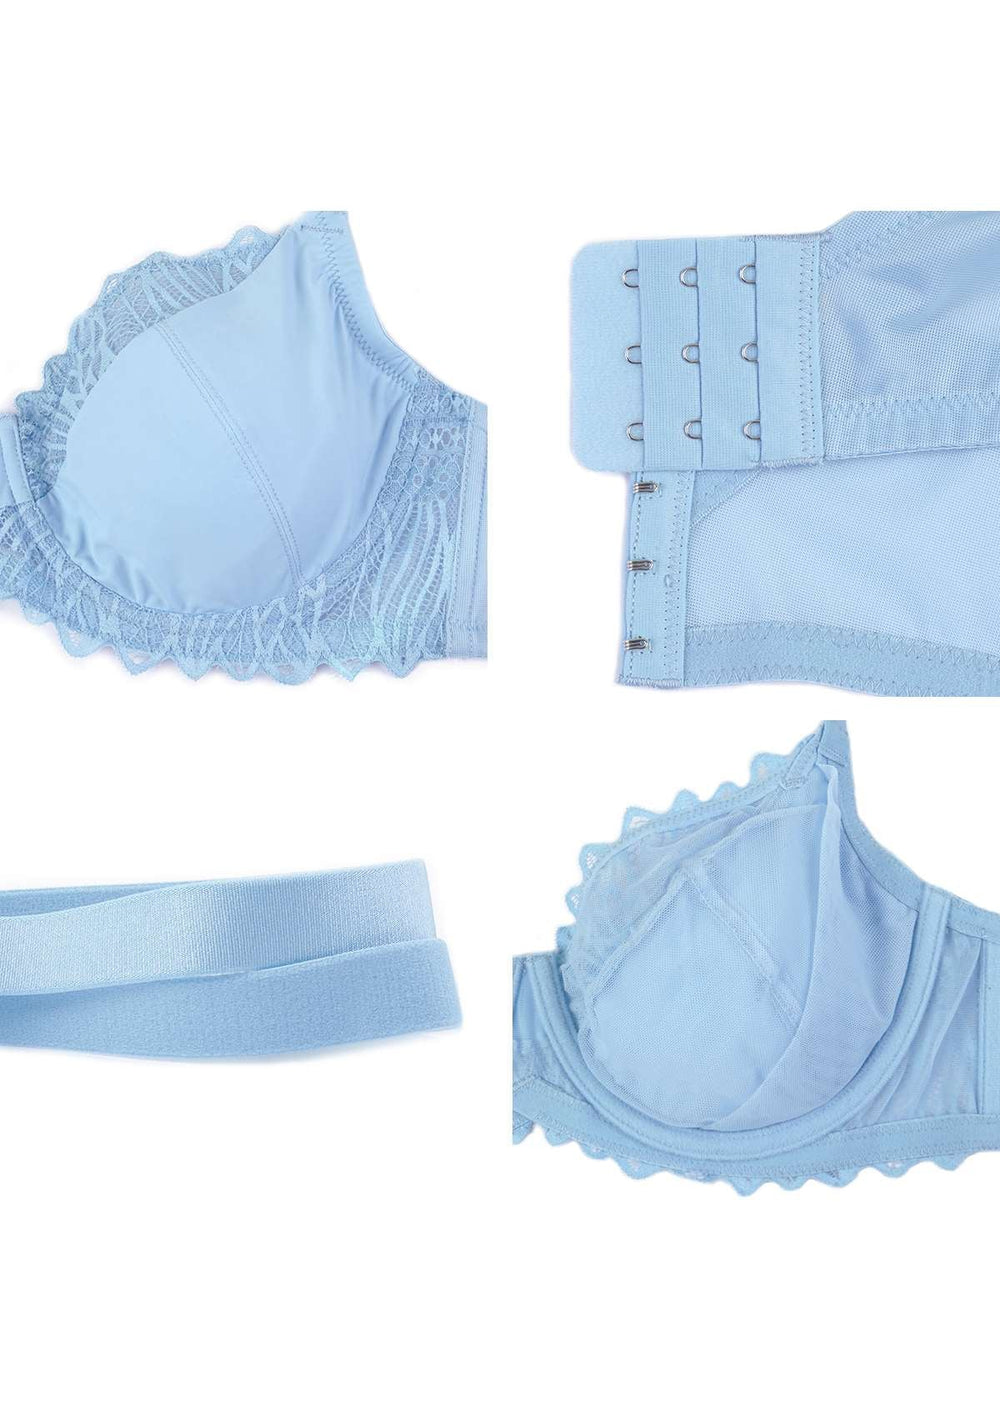 Buy online White Cotton Lette Bra from lingerie for Women by Prettysecrets  for ₹899 at 0% off